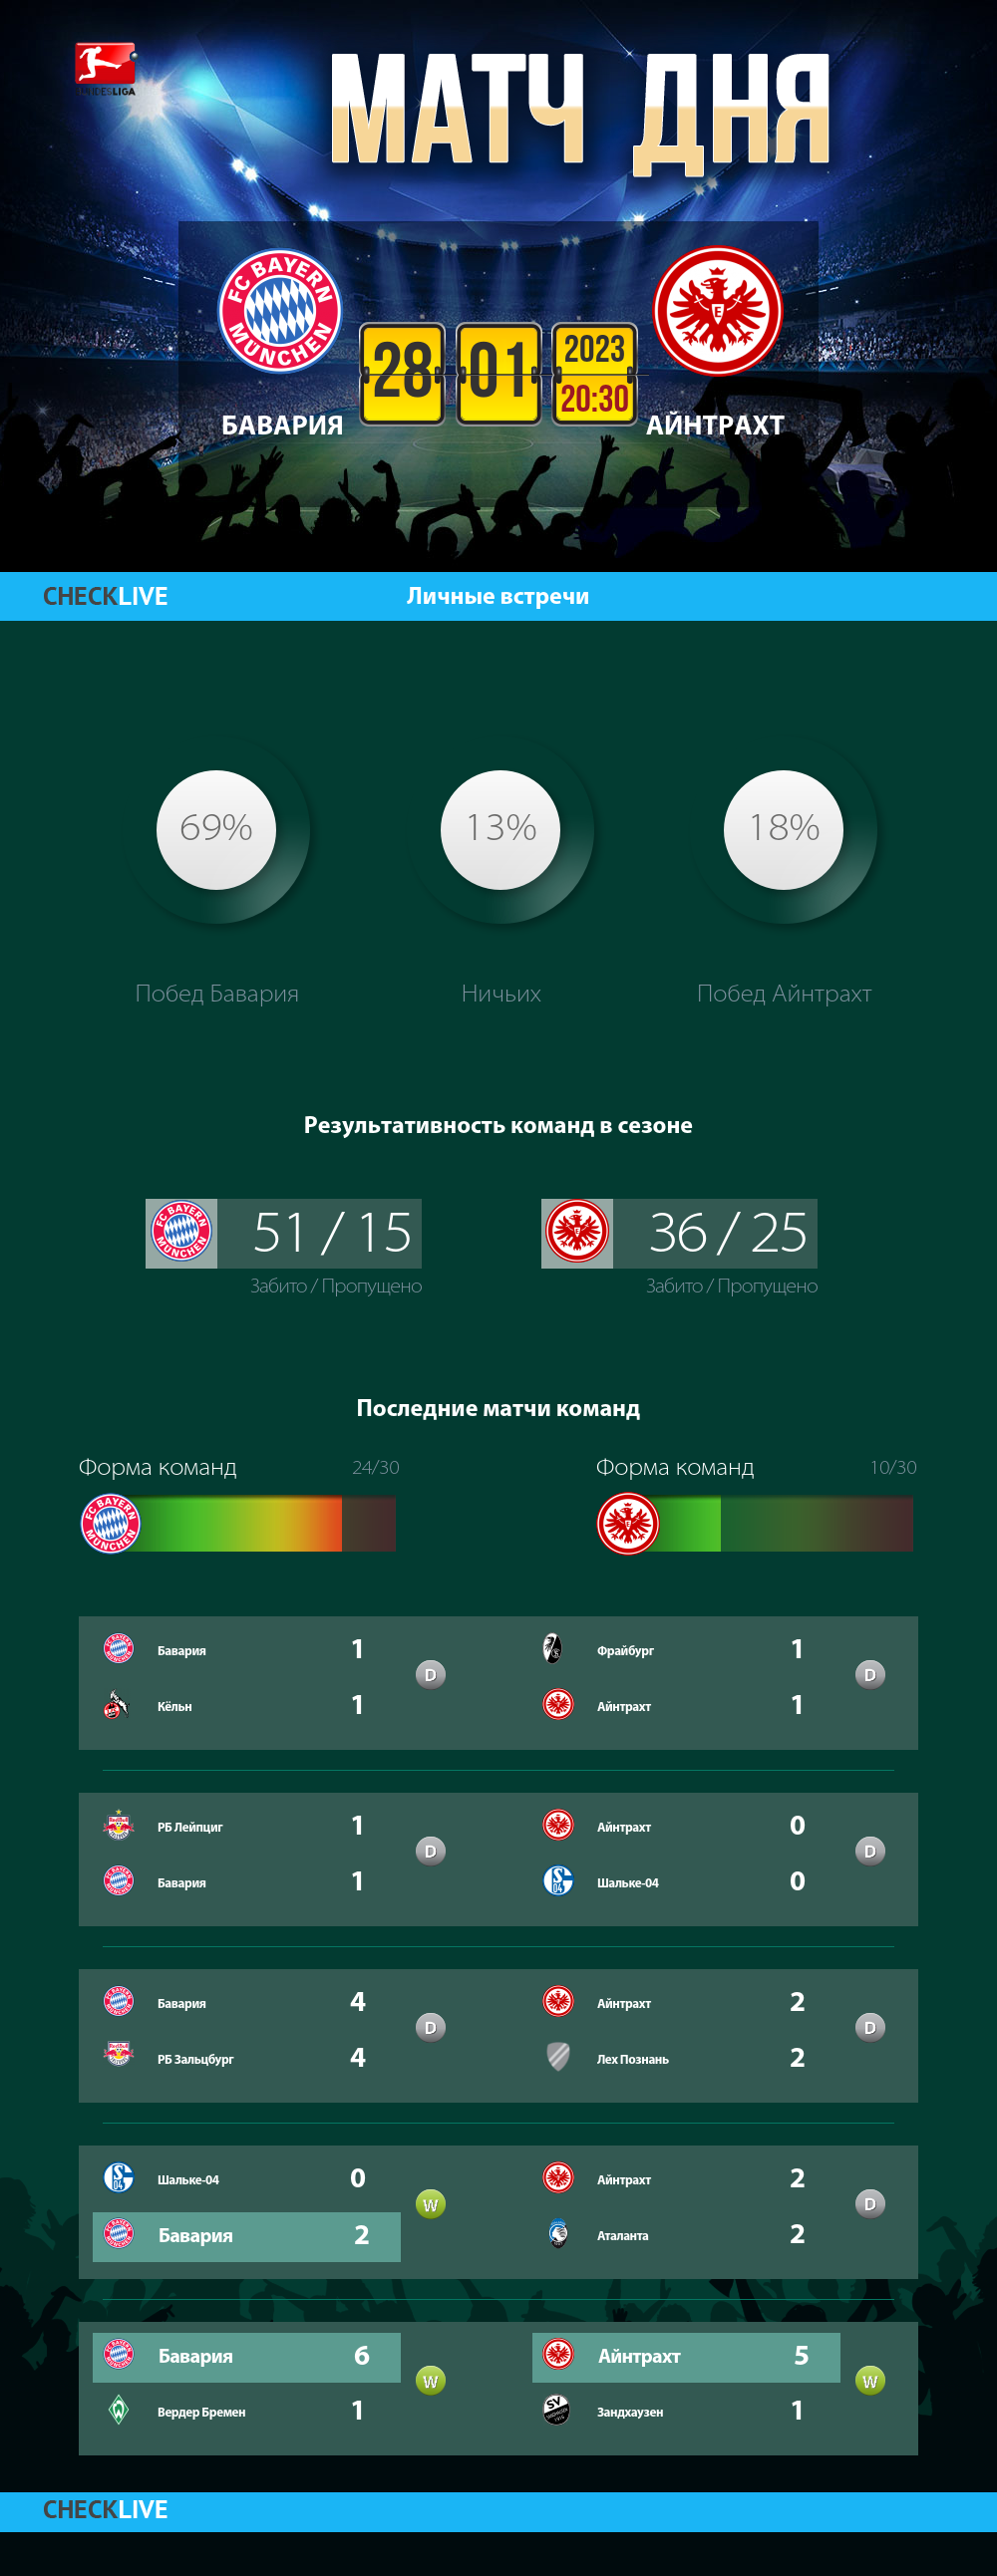 Инфографика Бавария и Айнтрахт матч дня 28.01.2023